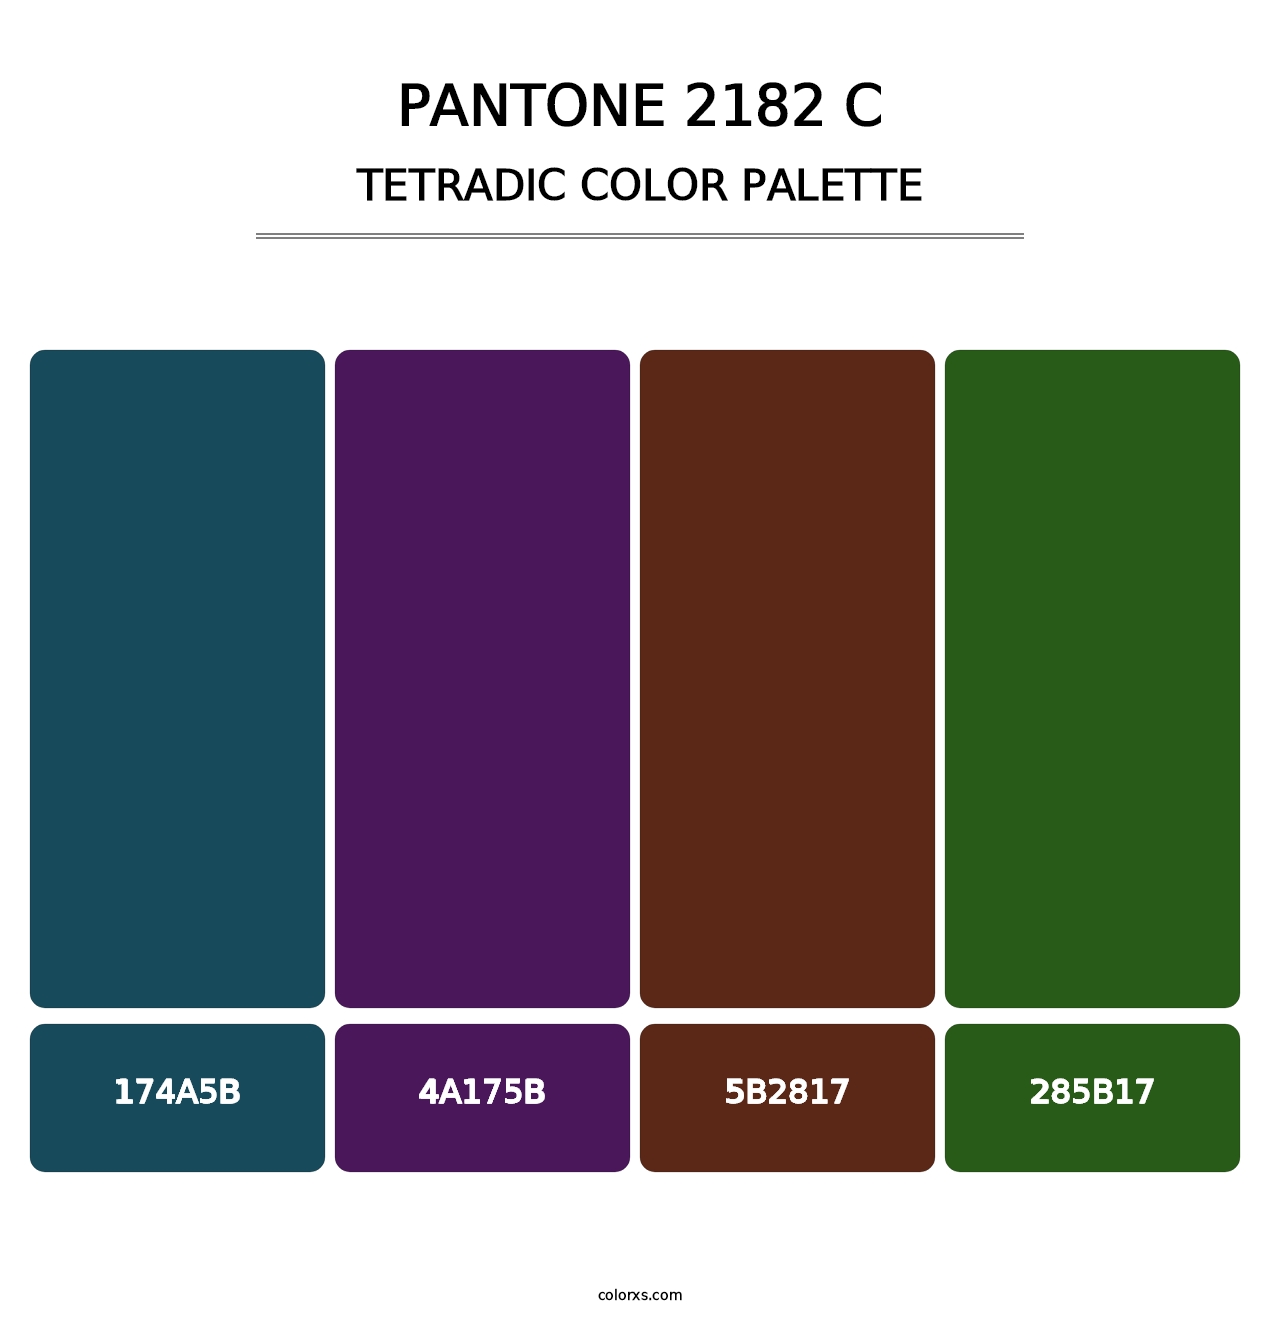 PANTONE 2182 C - Tetradic Color Palette